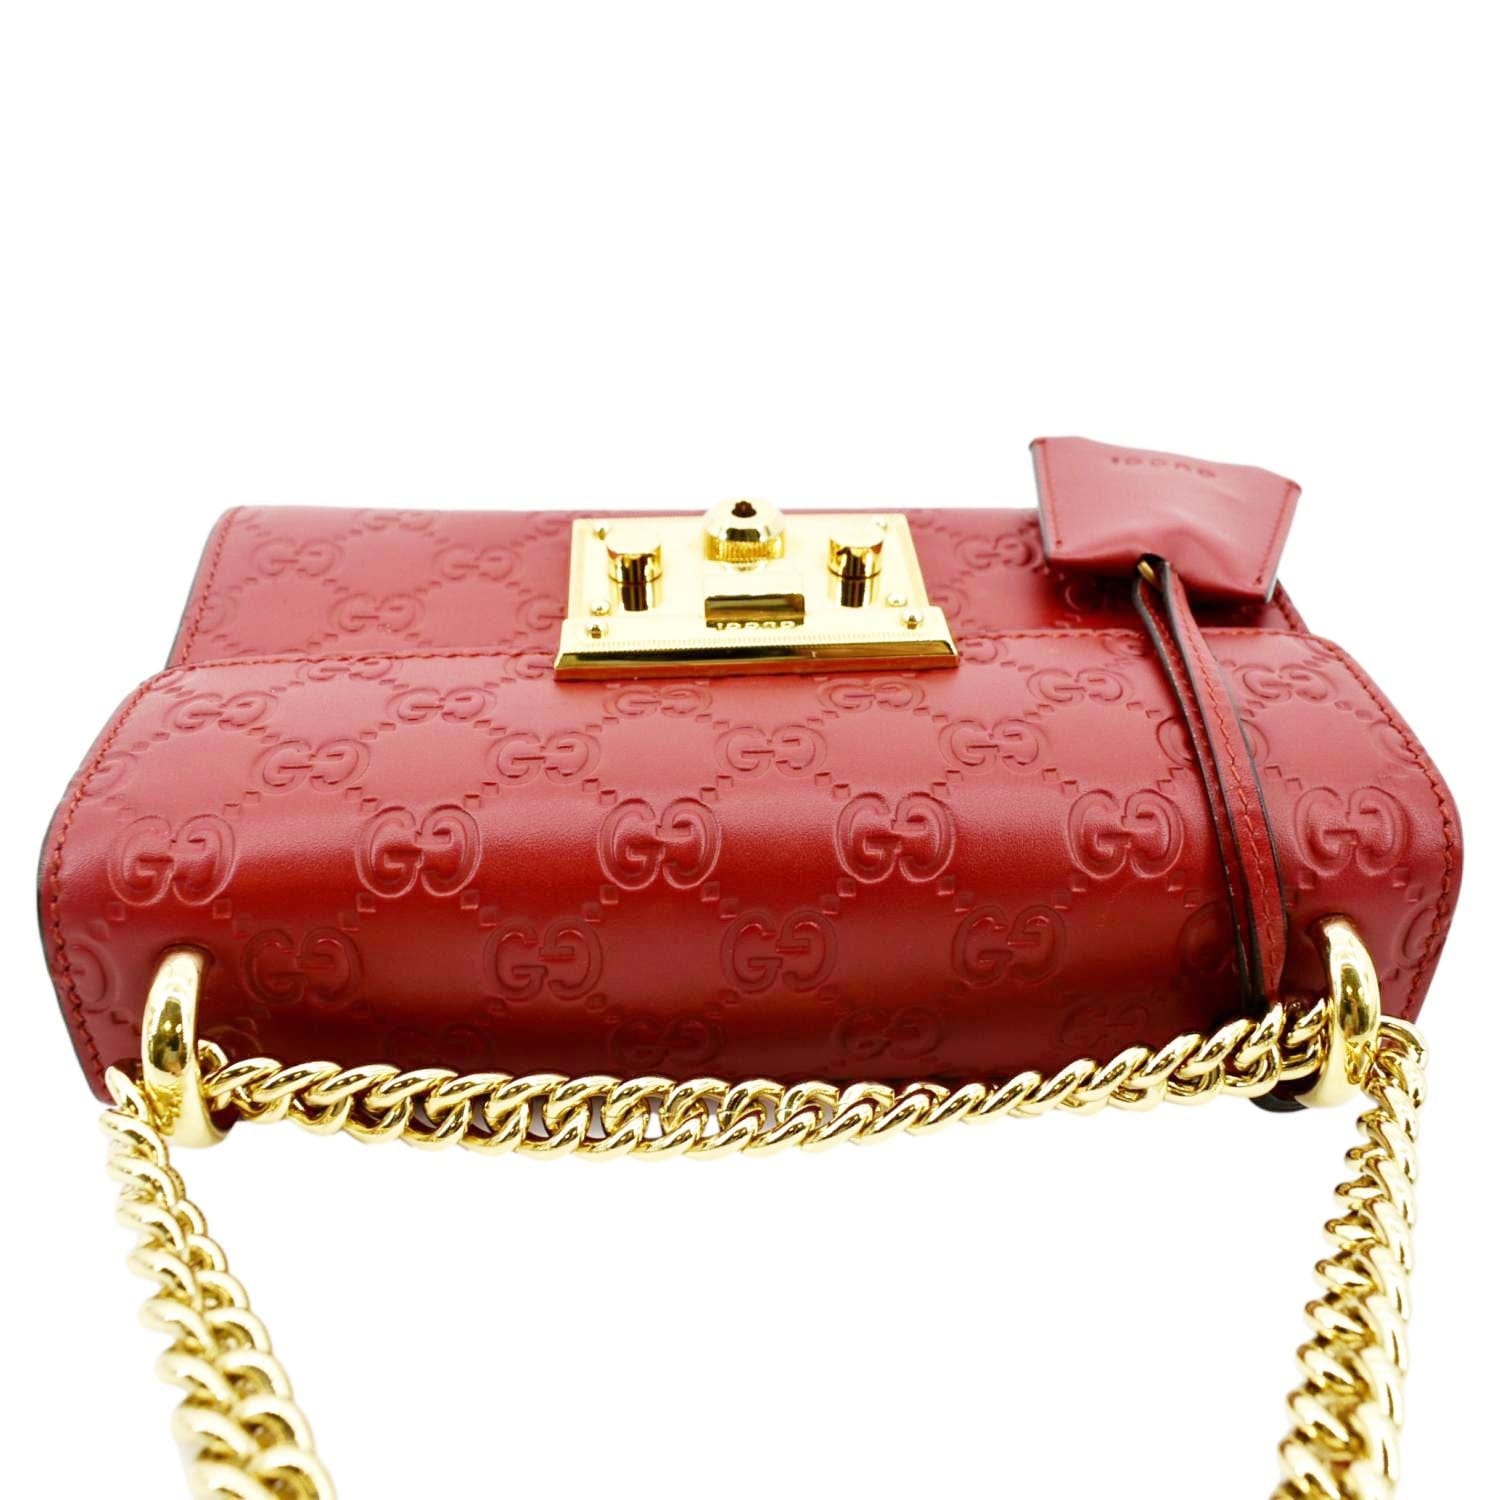 Padlock leather handbag